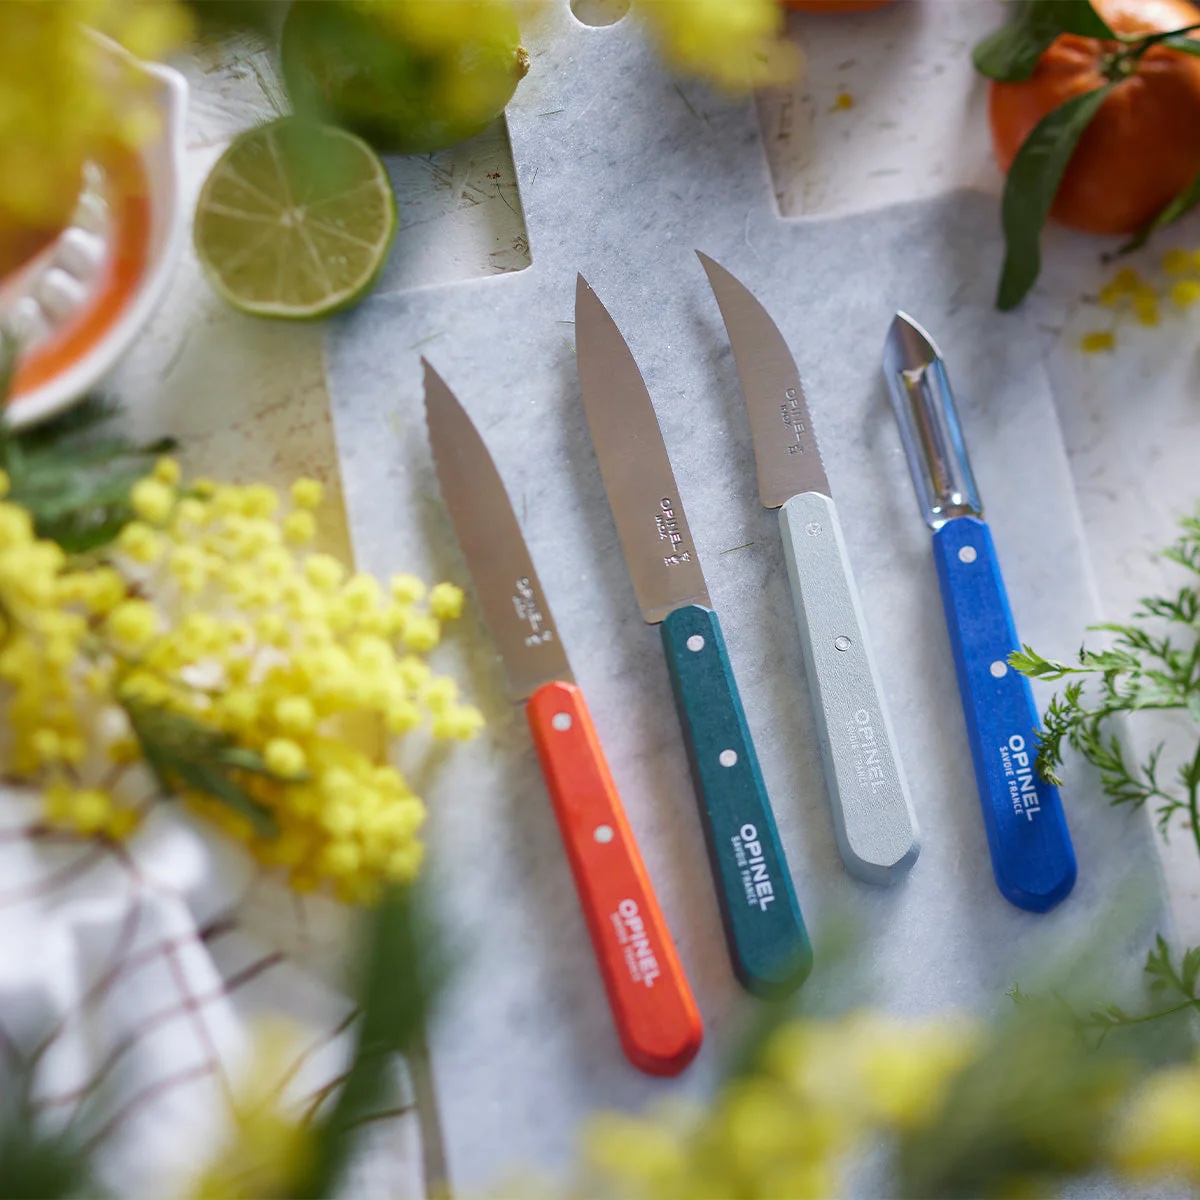 Everyday Living® Multi Color Paring Knife Set, 3 pk - Food 4 Less